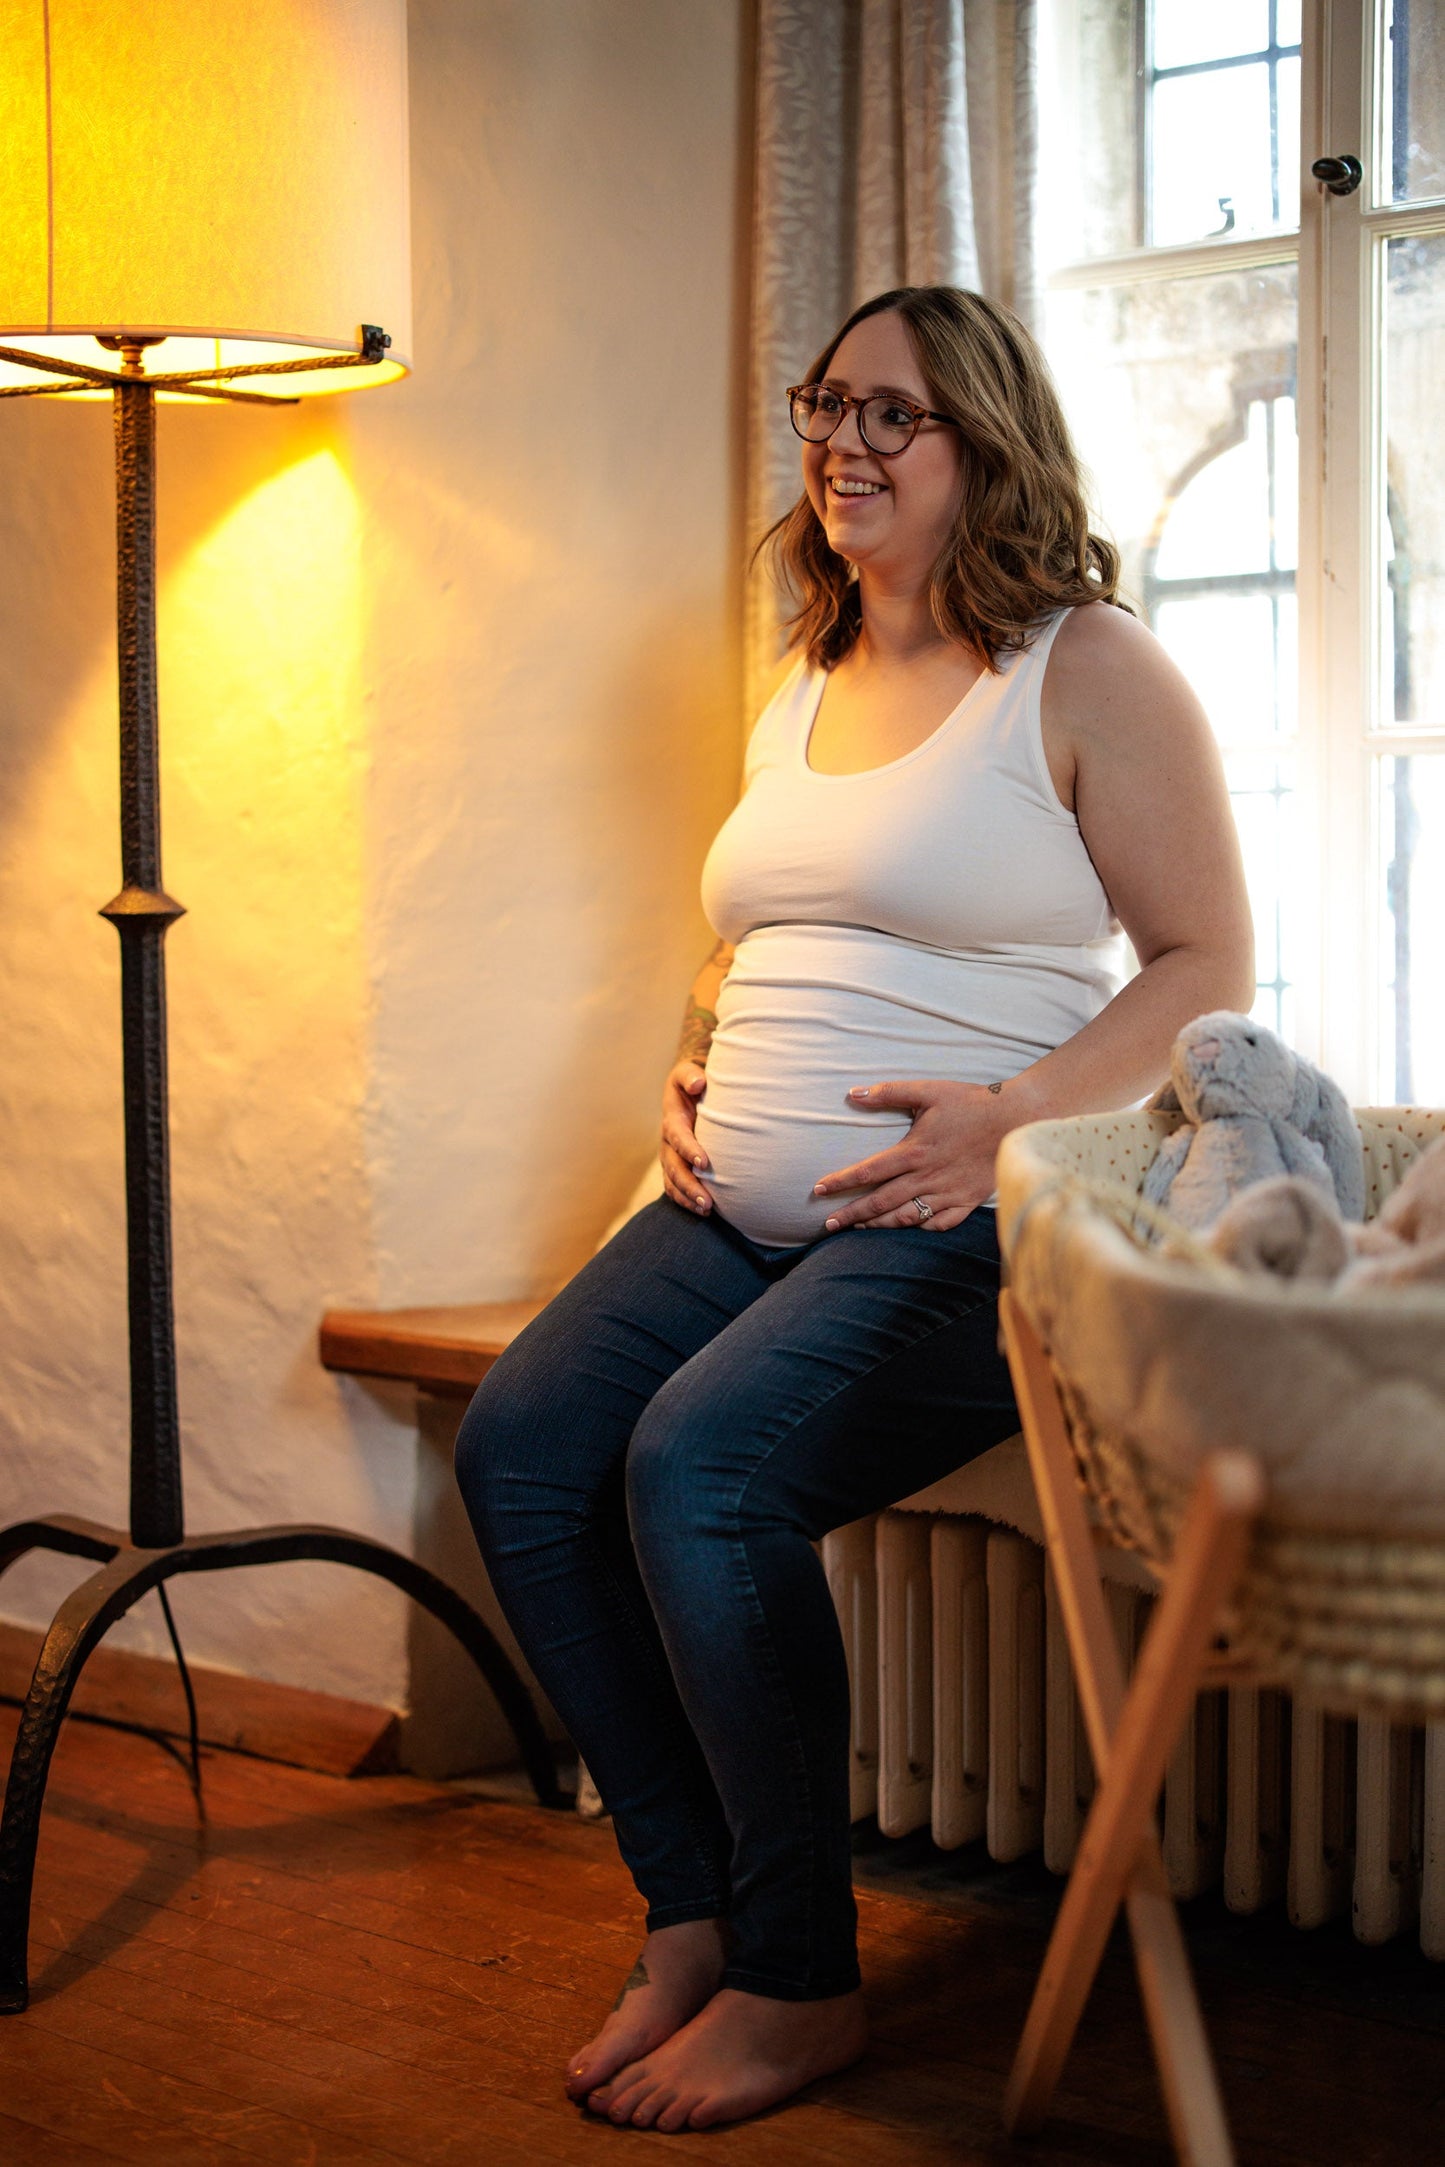 Maternity Vest Top in White Organic Cotton for pregnancy